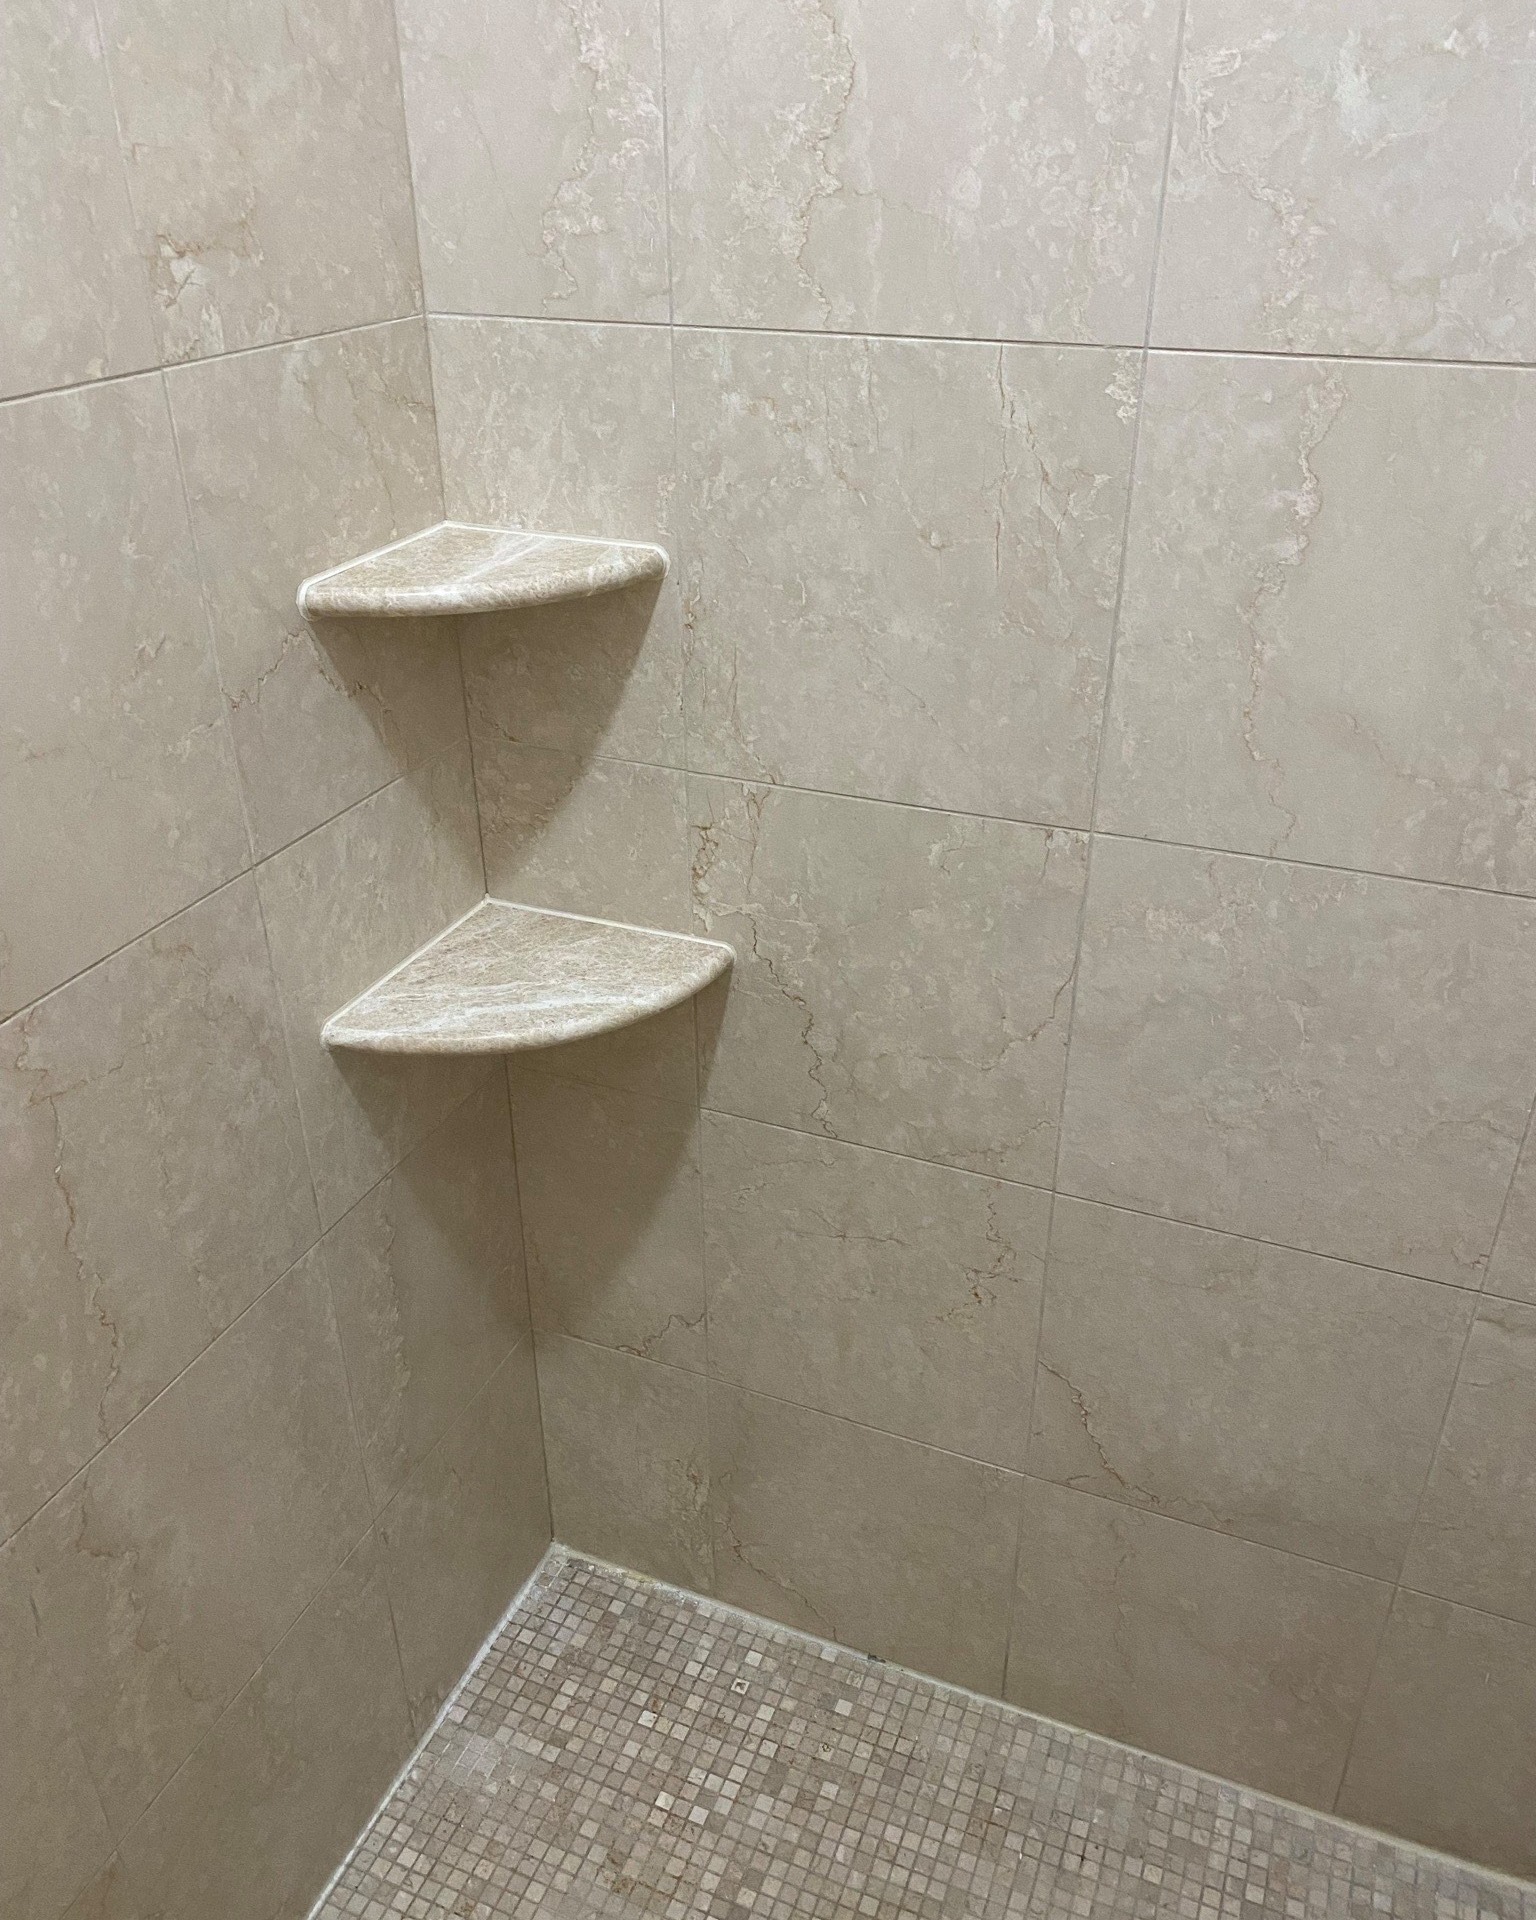 Easy Install Shower Accessories Corner Shelf: The GoShelf System